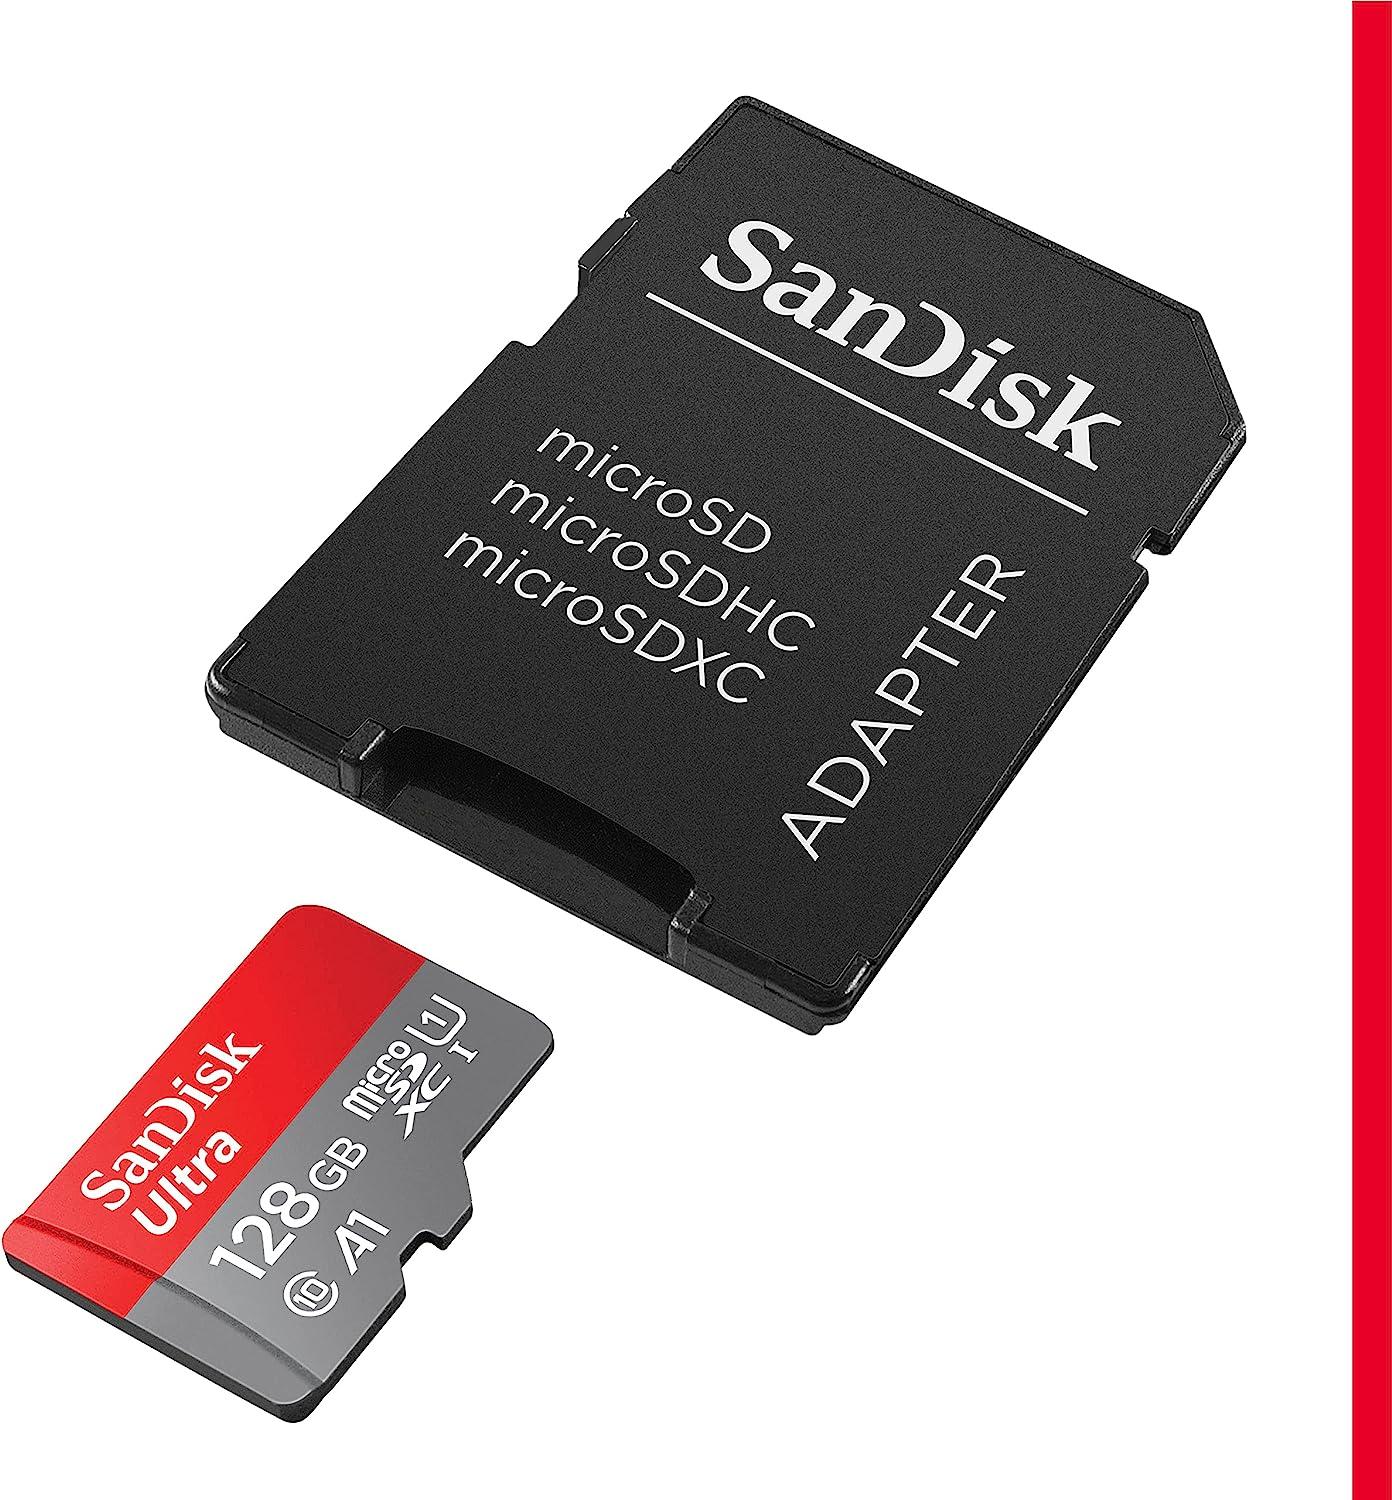 SanDisk 128GB Ultra UHS-I microSDXC Memory Card